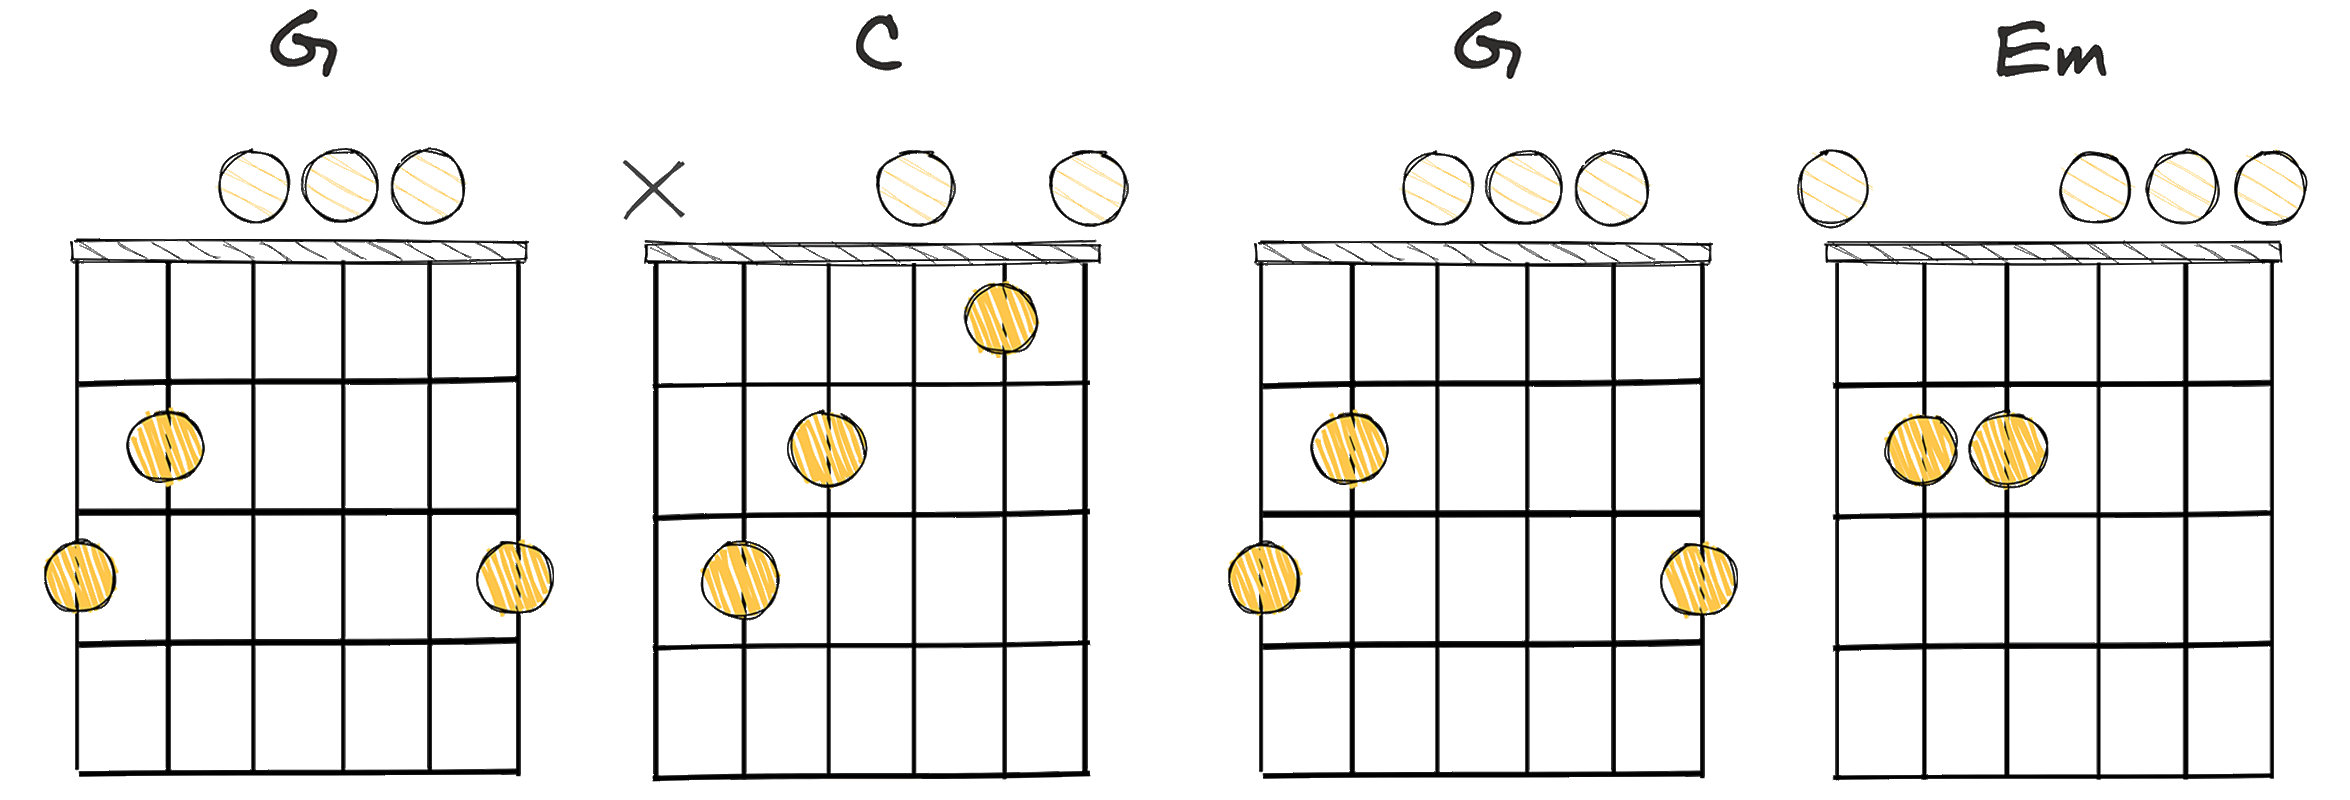 ii-V-I-IV (2-5-1-4) chords diagram